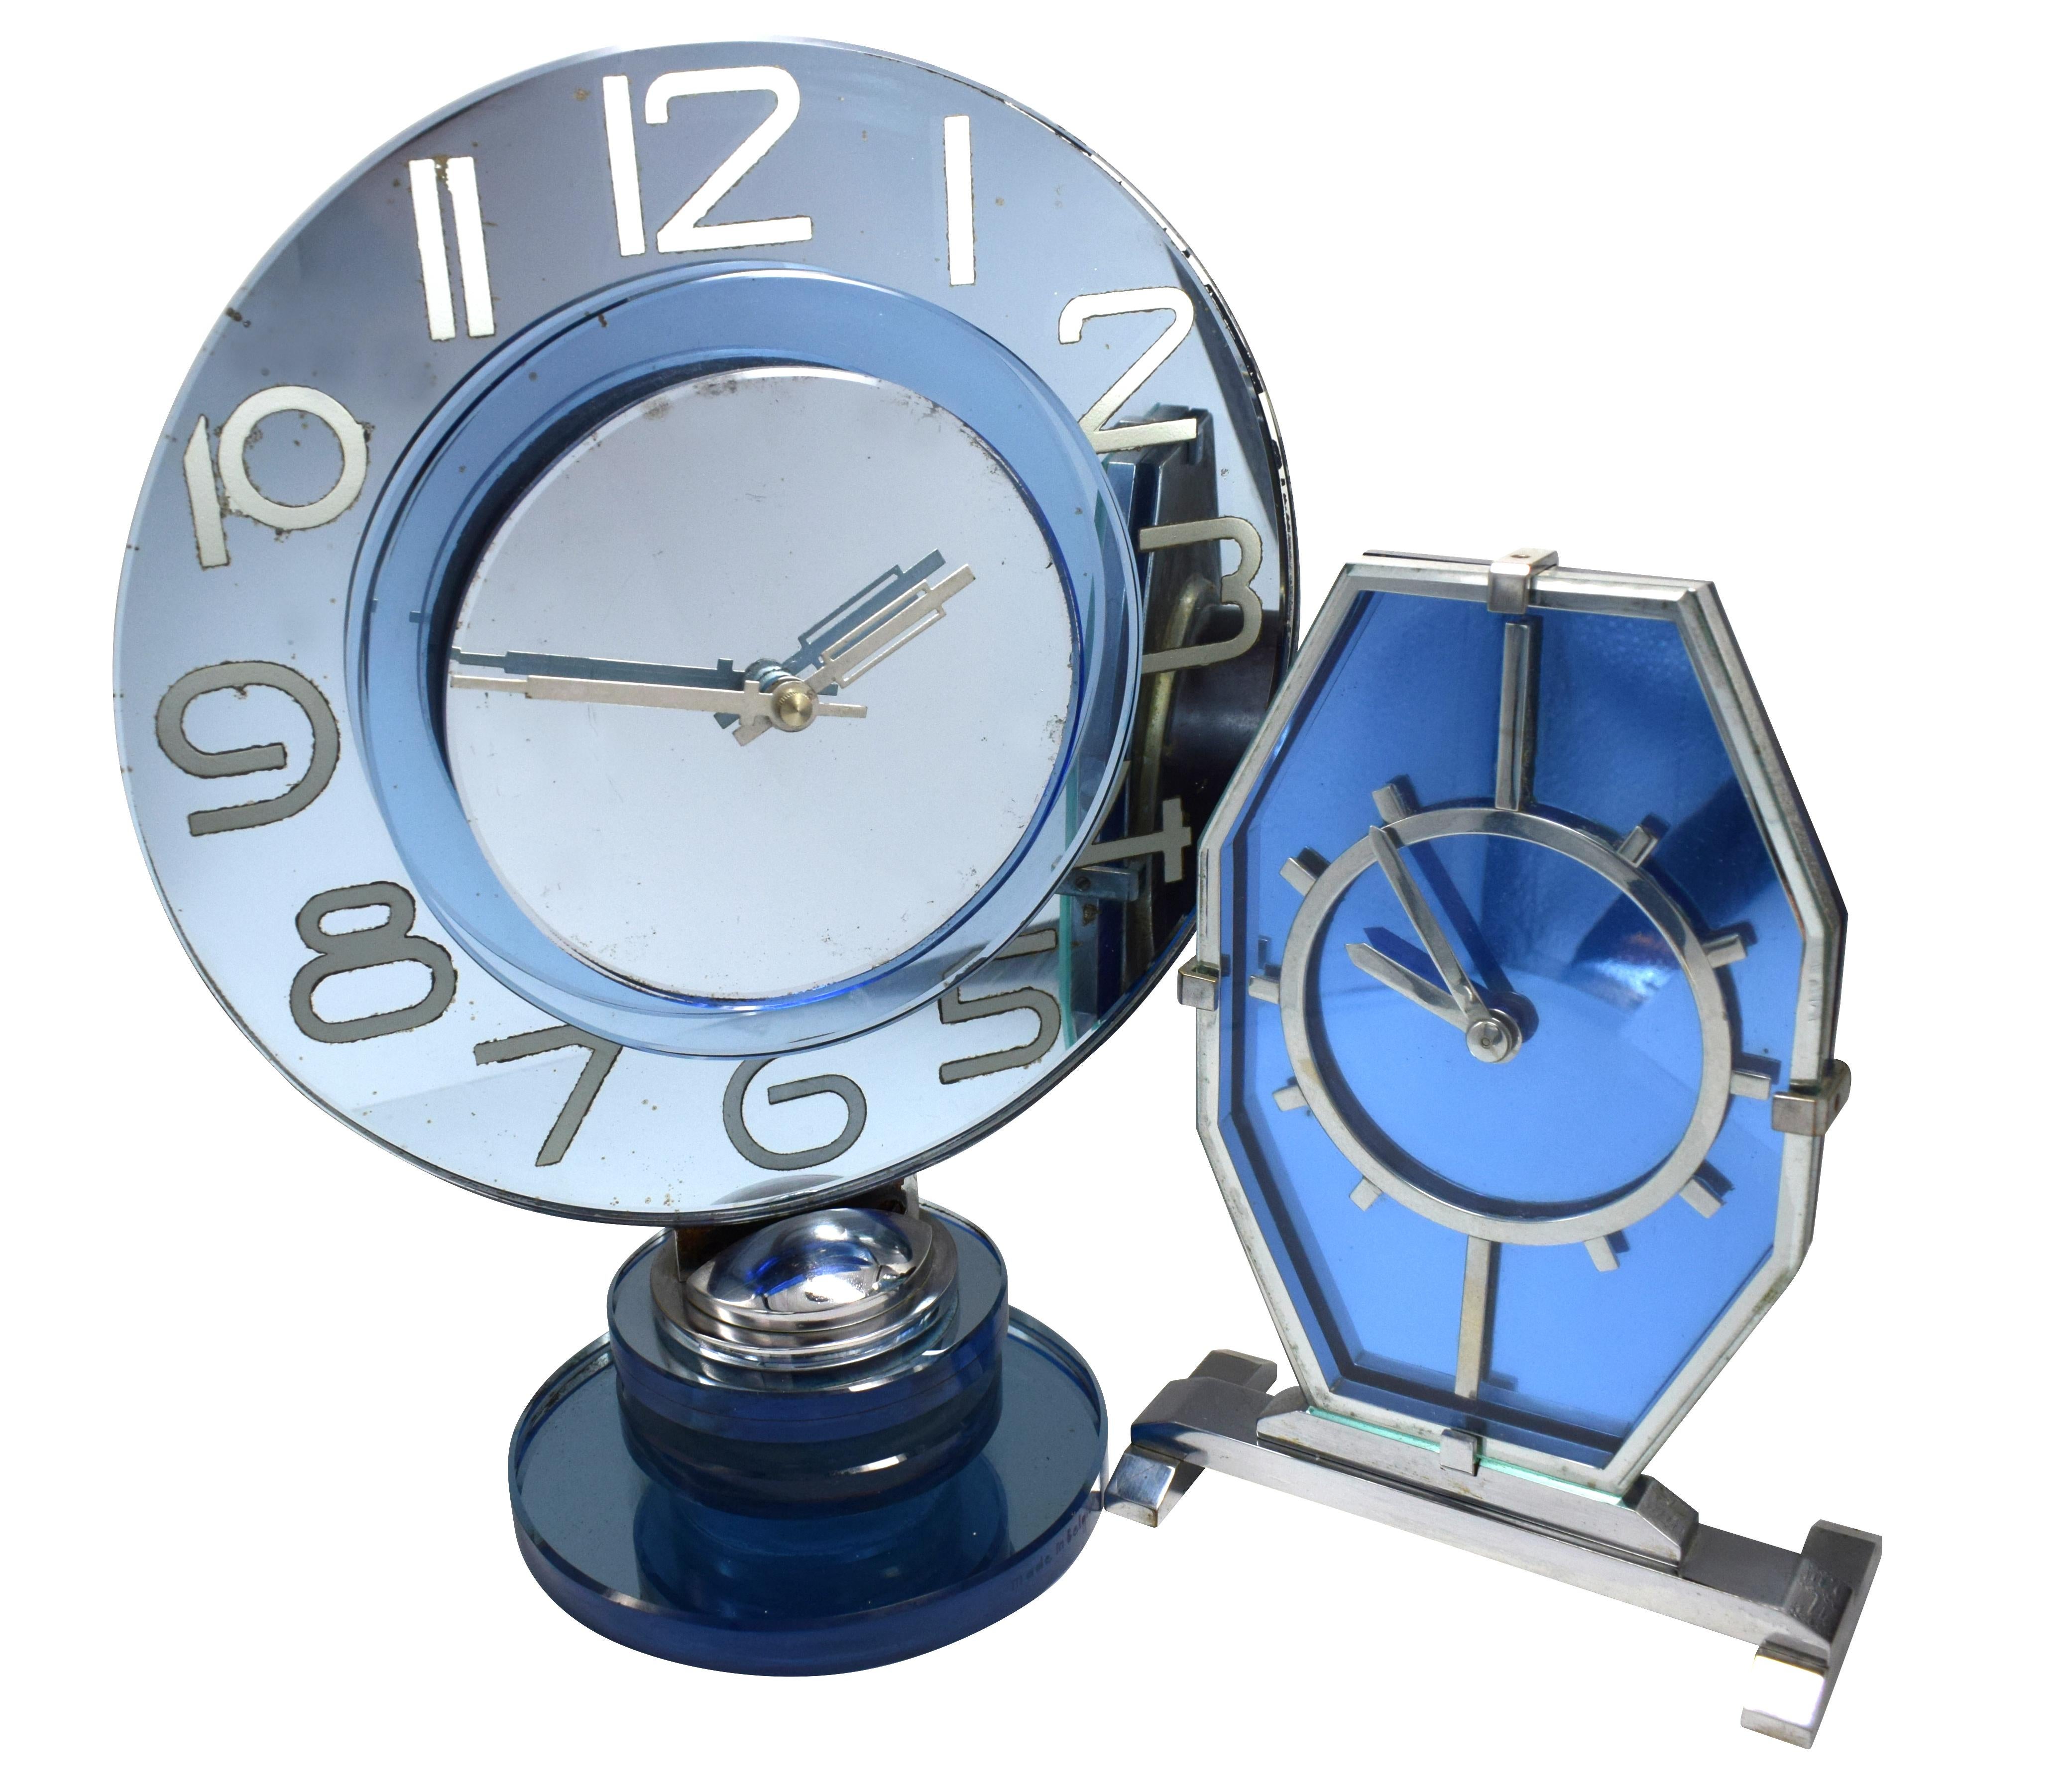 Large and Rare Model Modernist Art Deco Blue Mirror Clock, circa 1935 In Good Condition For Sale In Devon, England